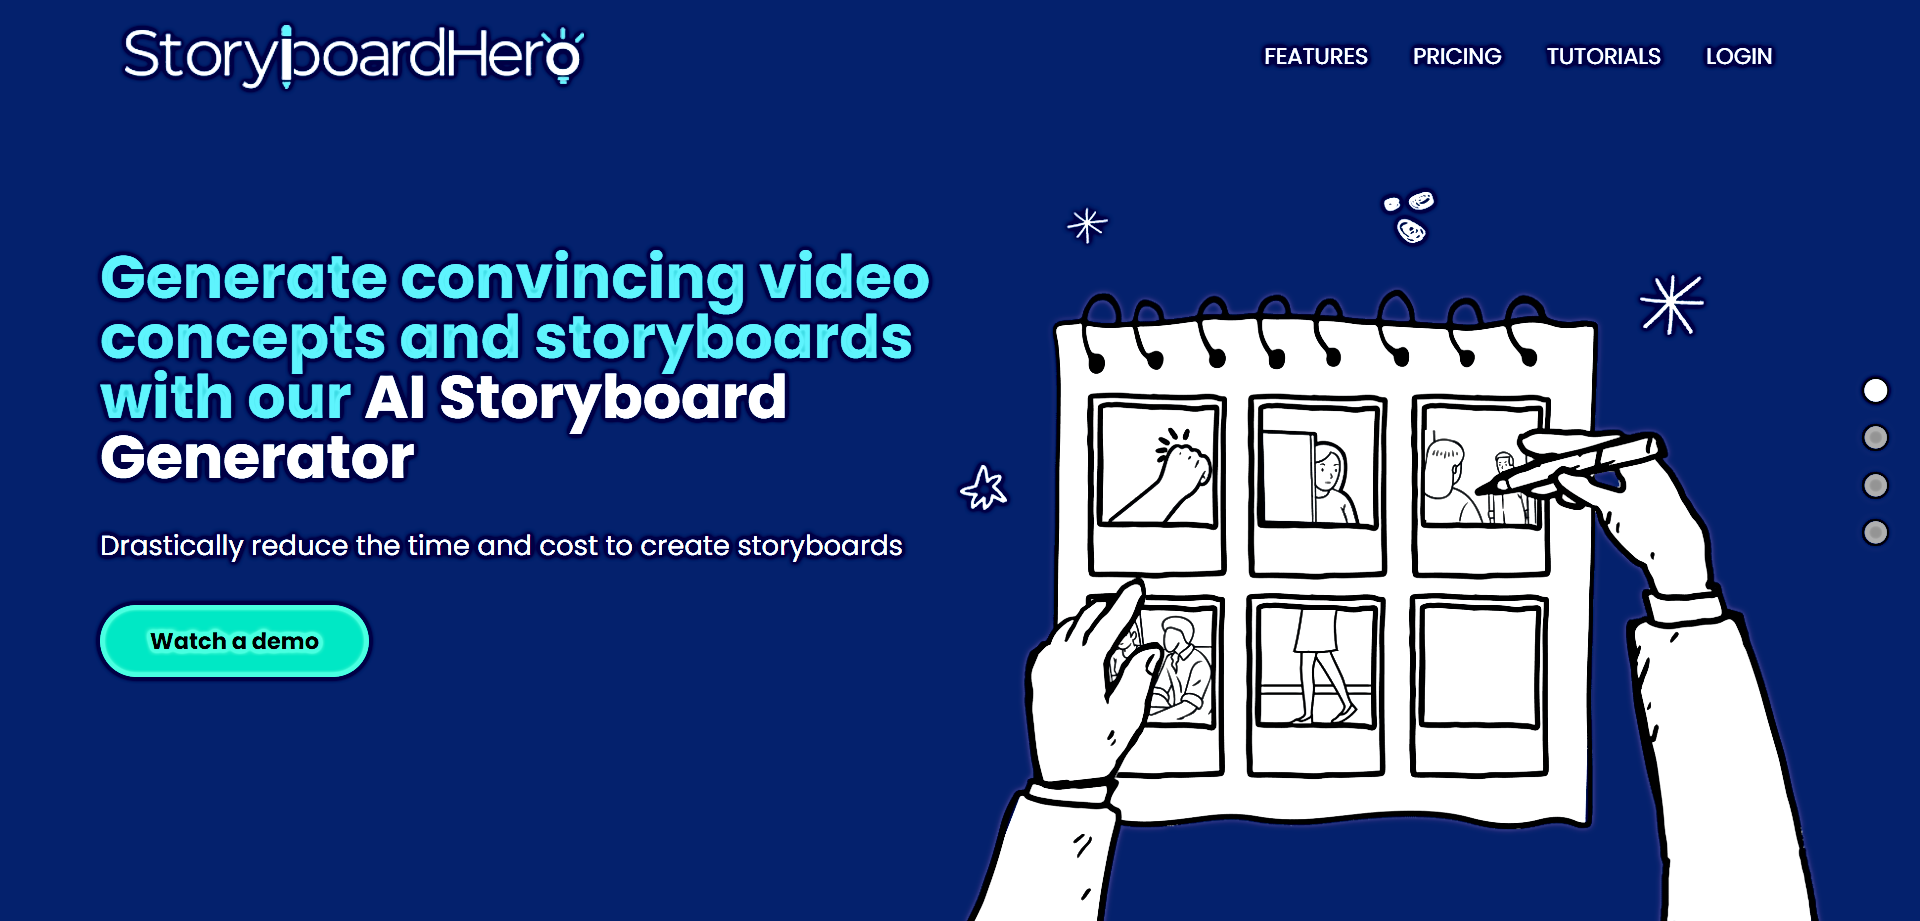 Storyboard Hero featured